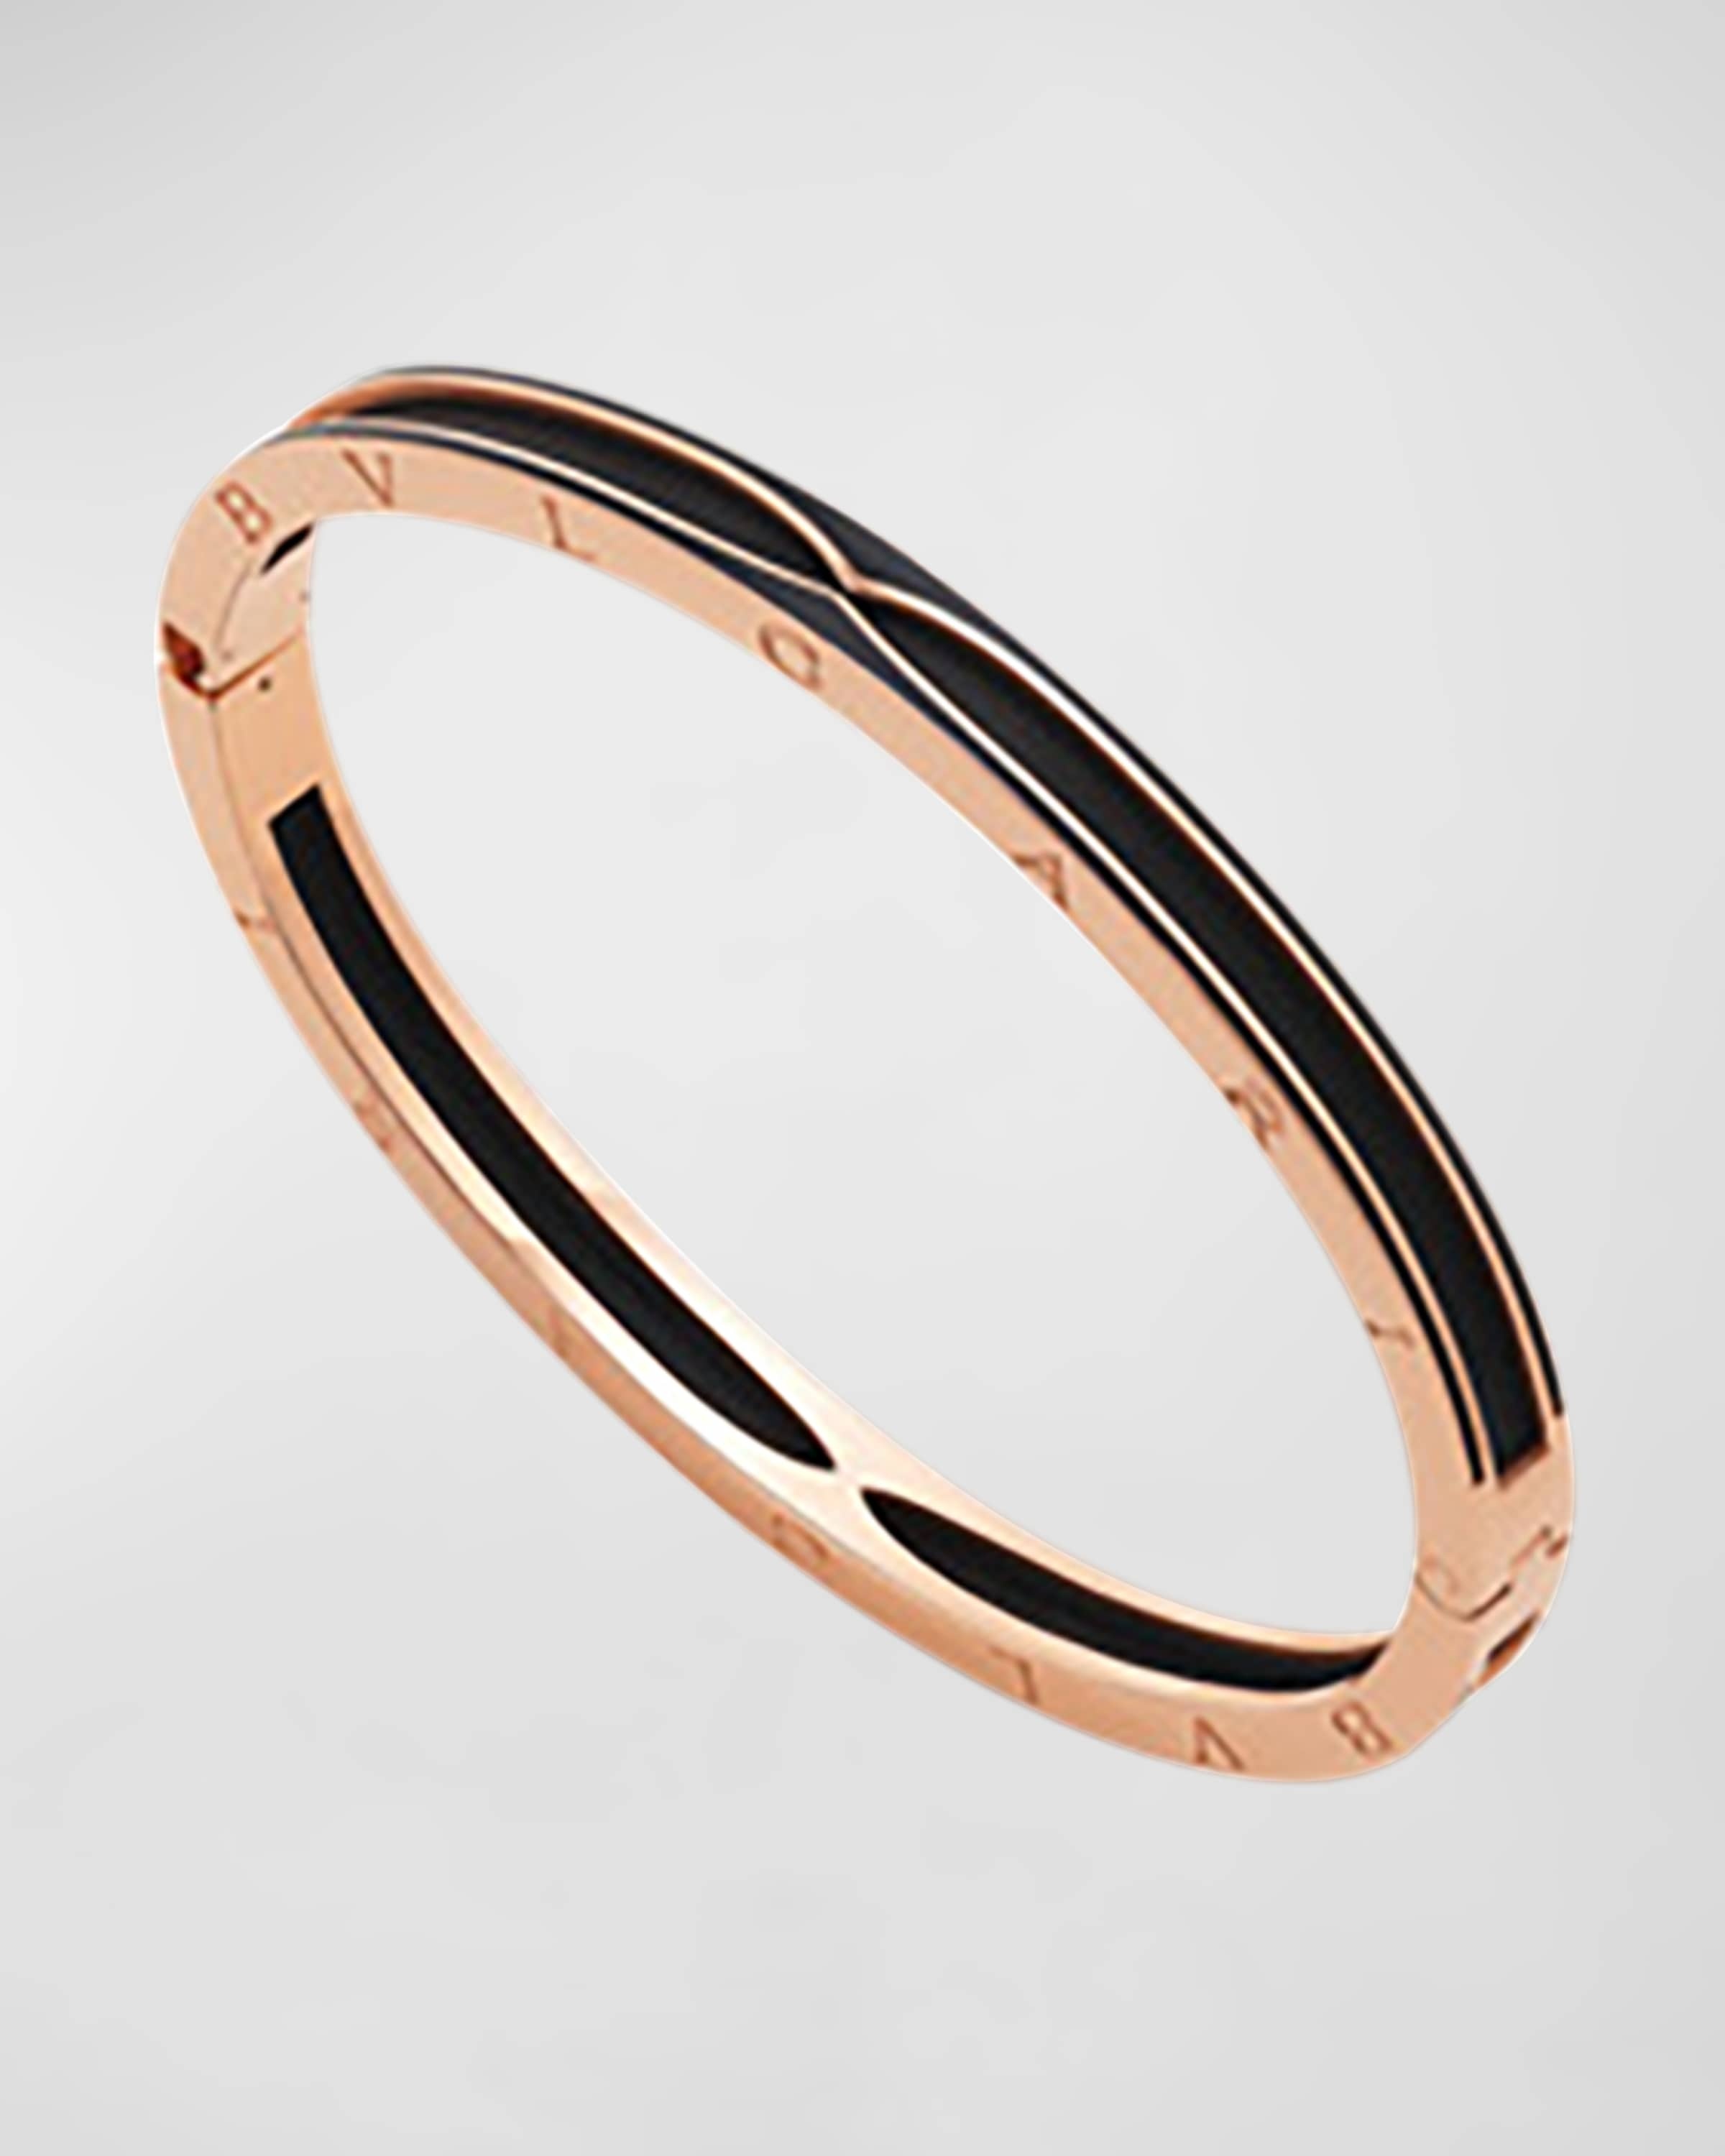 B.Zero1 Pink Gold Bracelet with Matte Black Ceramic Edge, Size L - 1